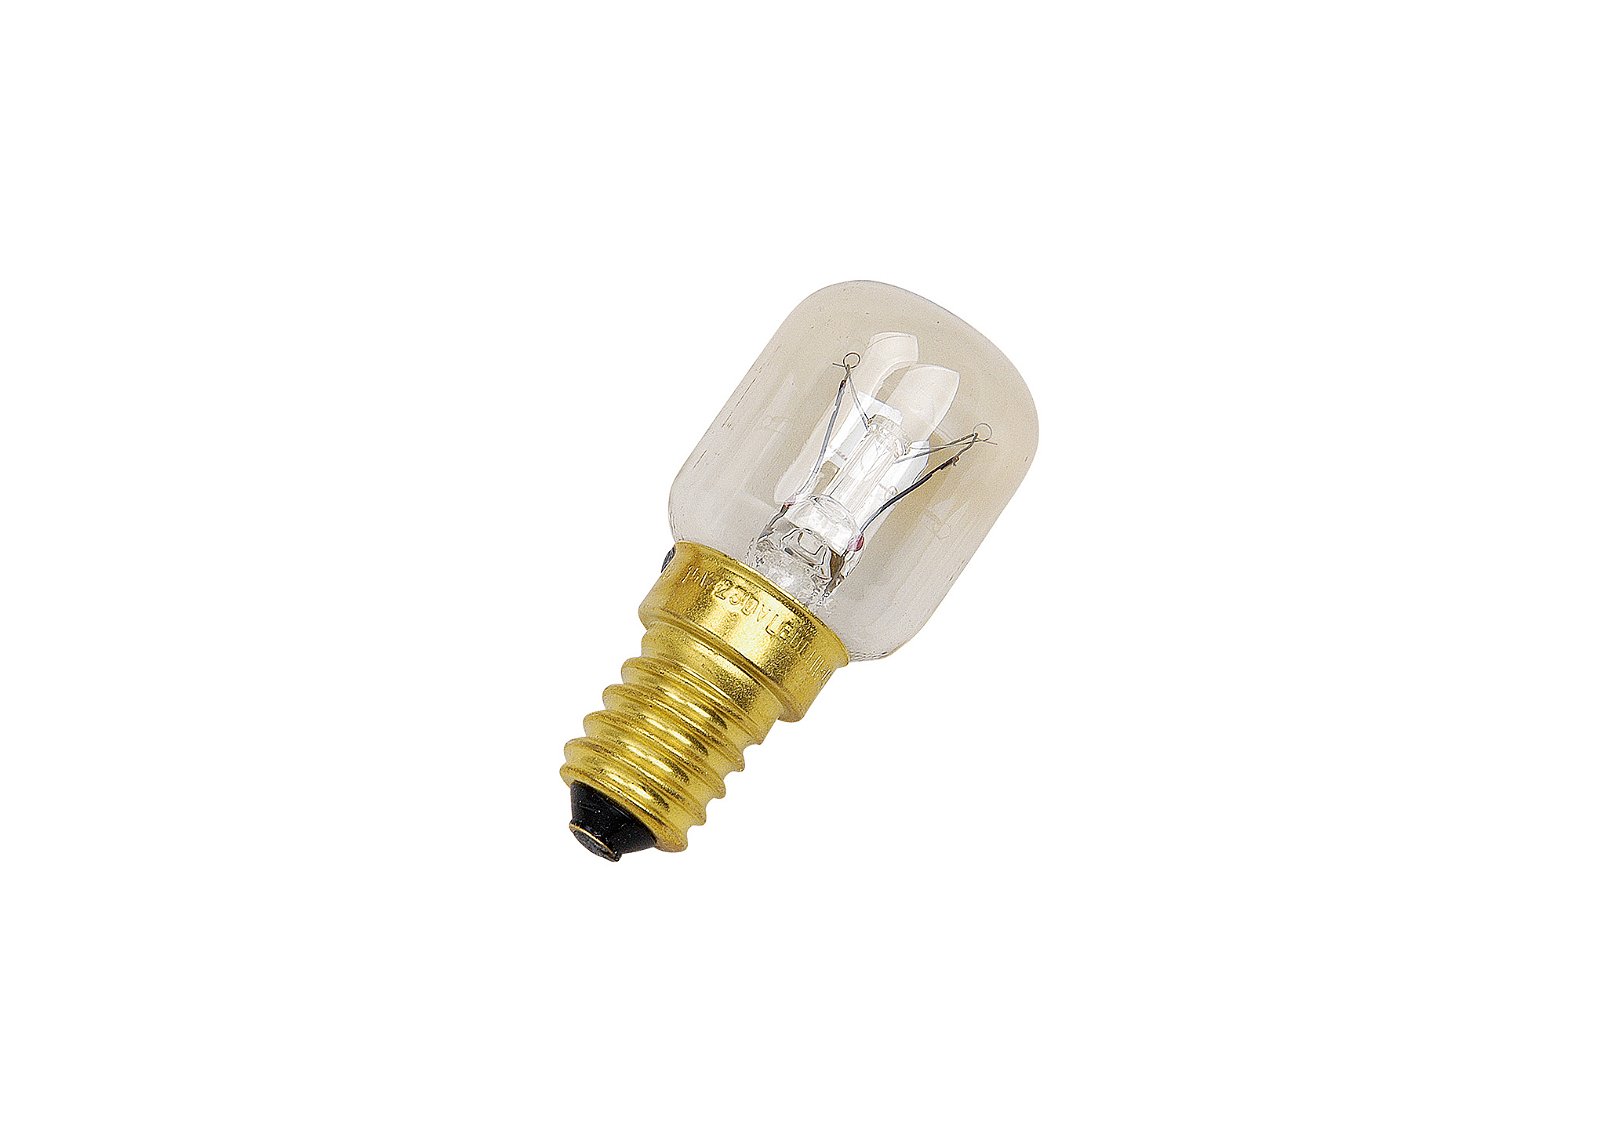 Electric light bulb, 15 watt